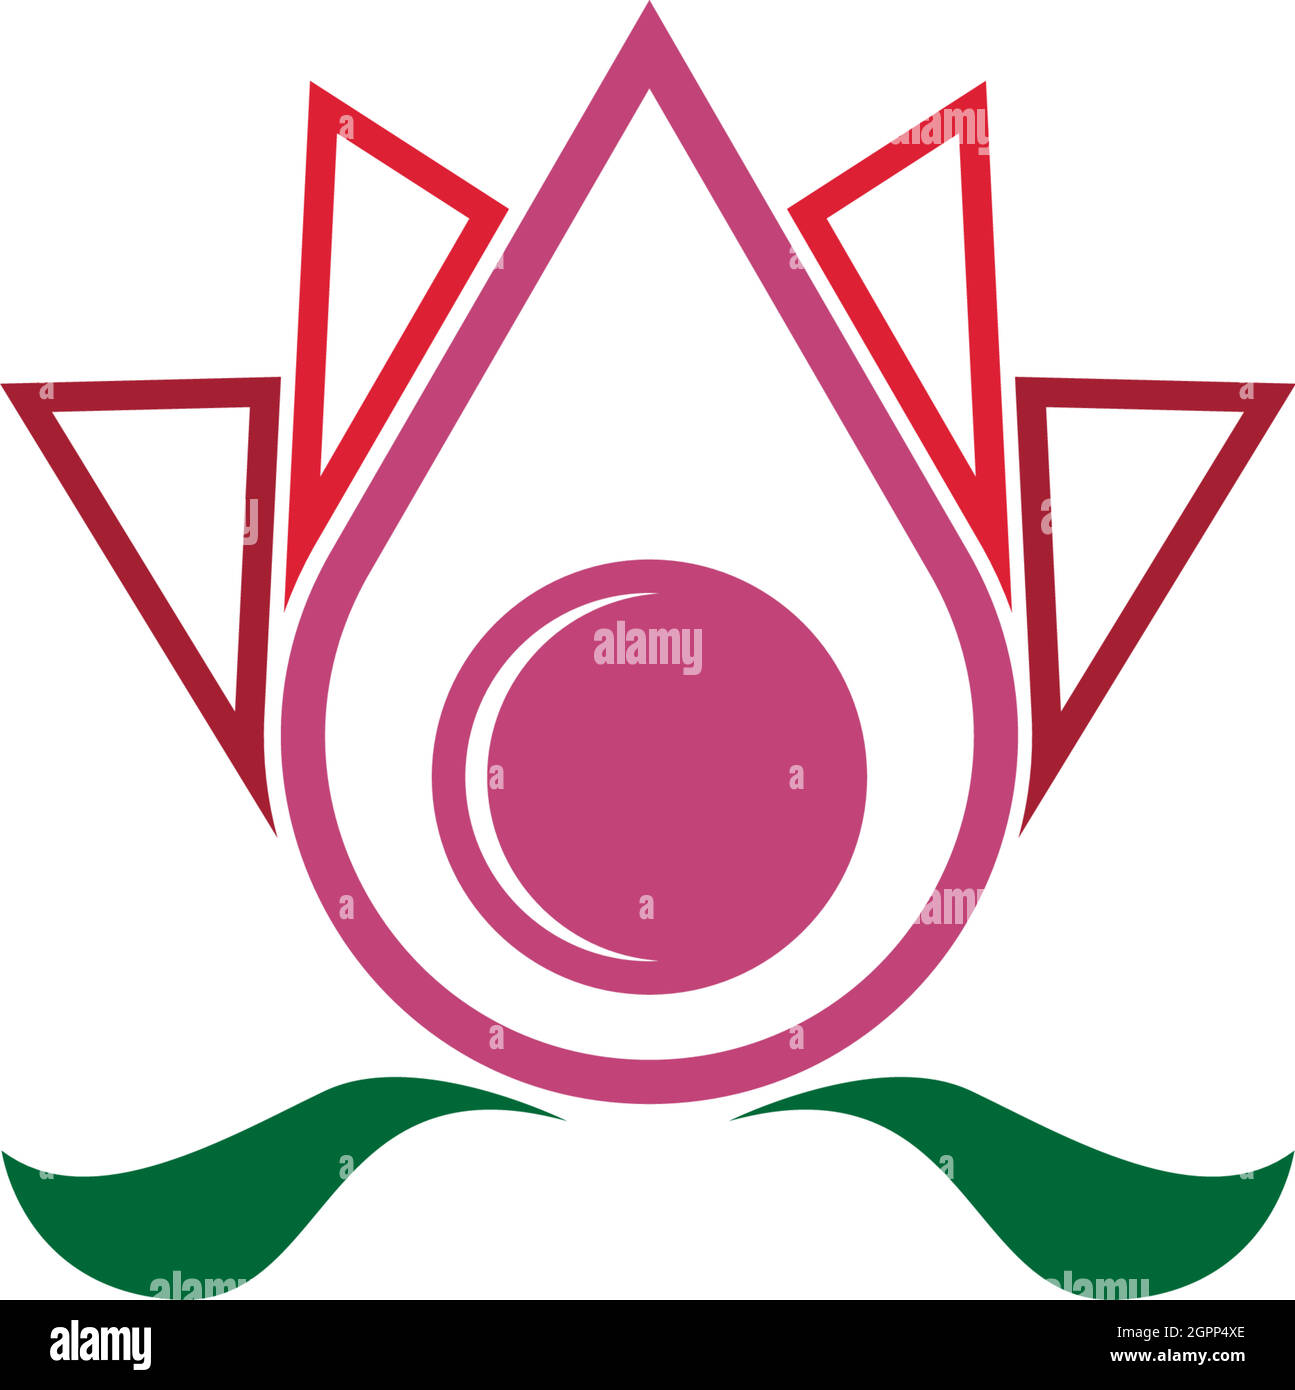 Beauty Lotus flowers logo icon design template Stock Vector